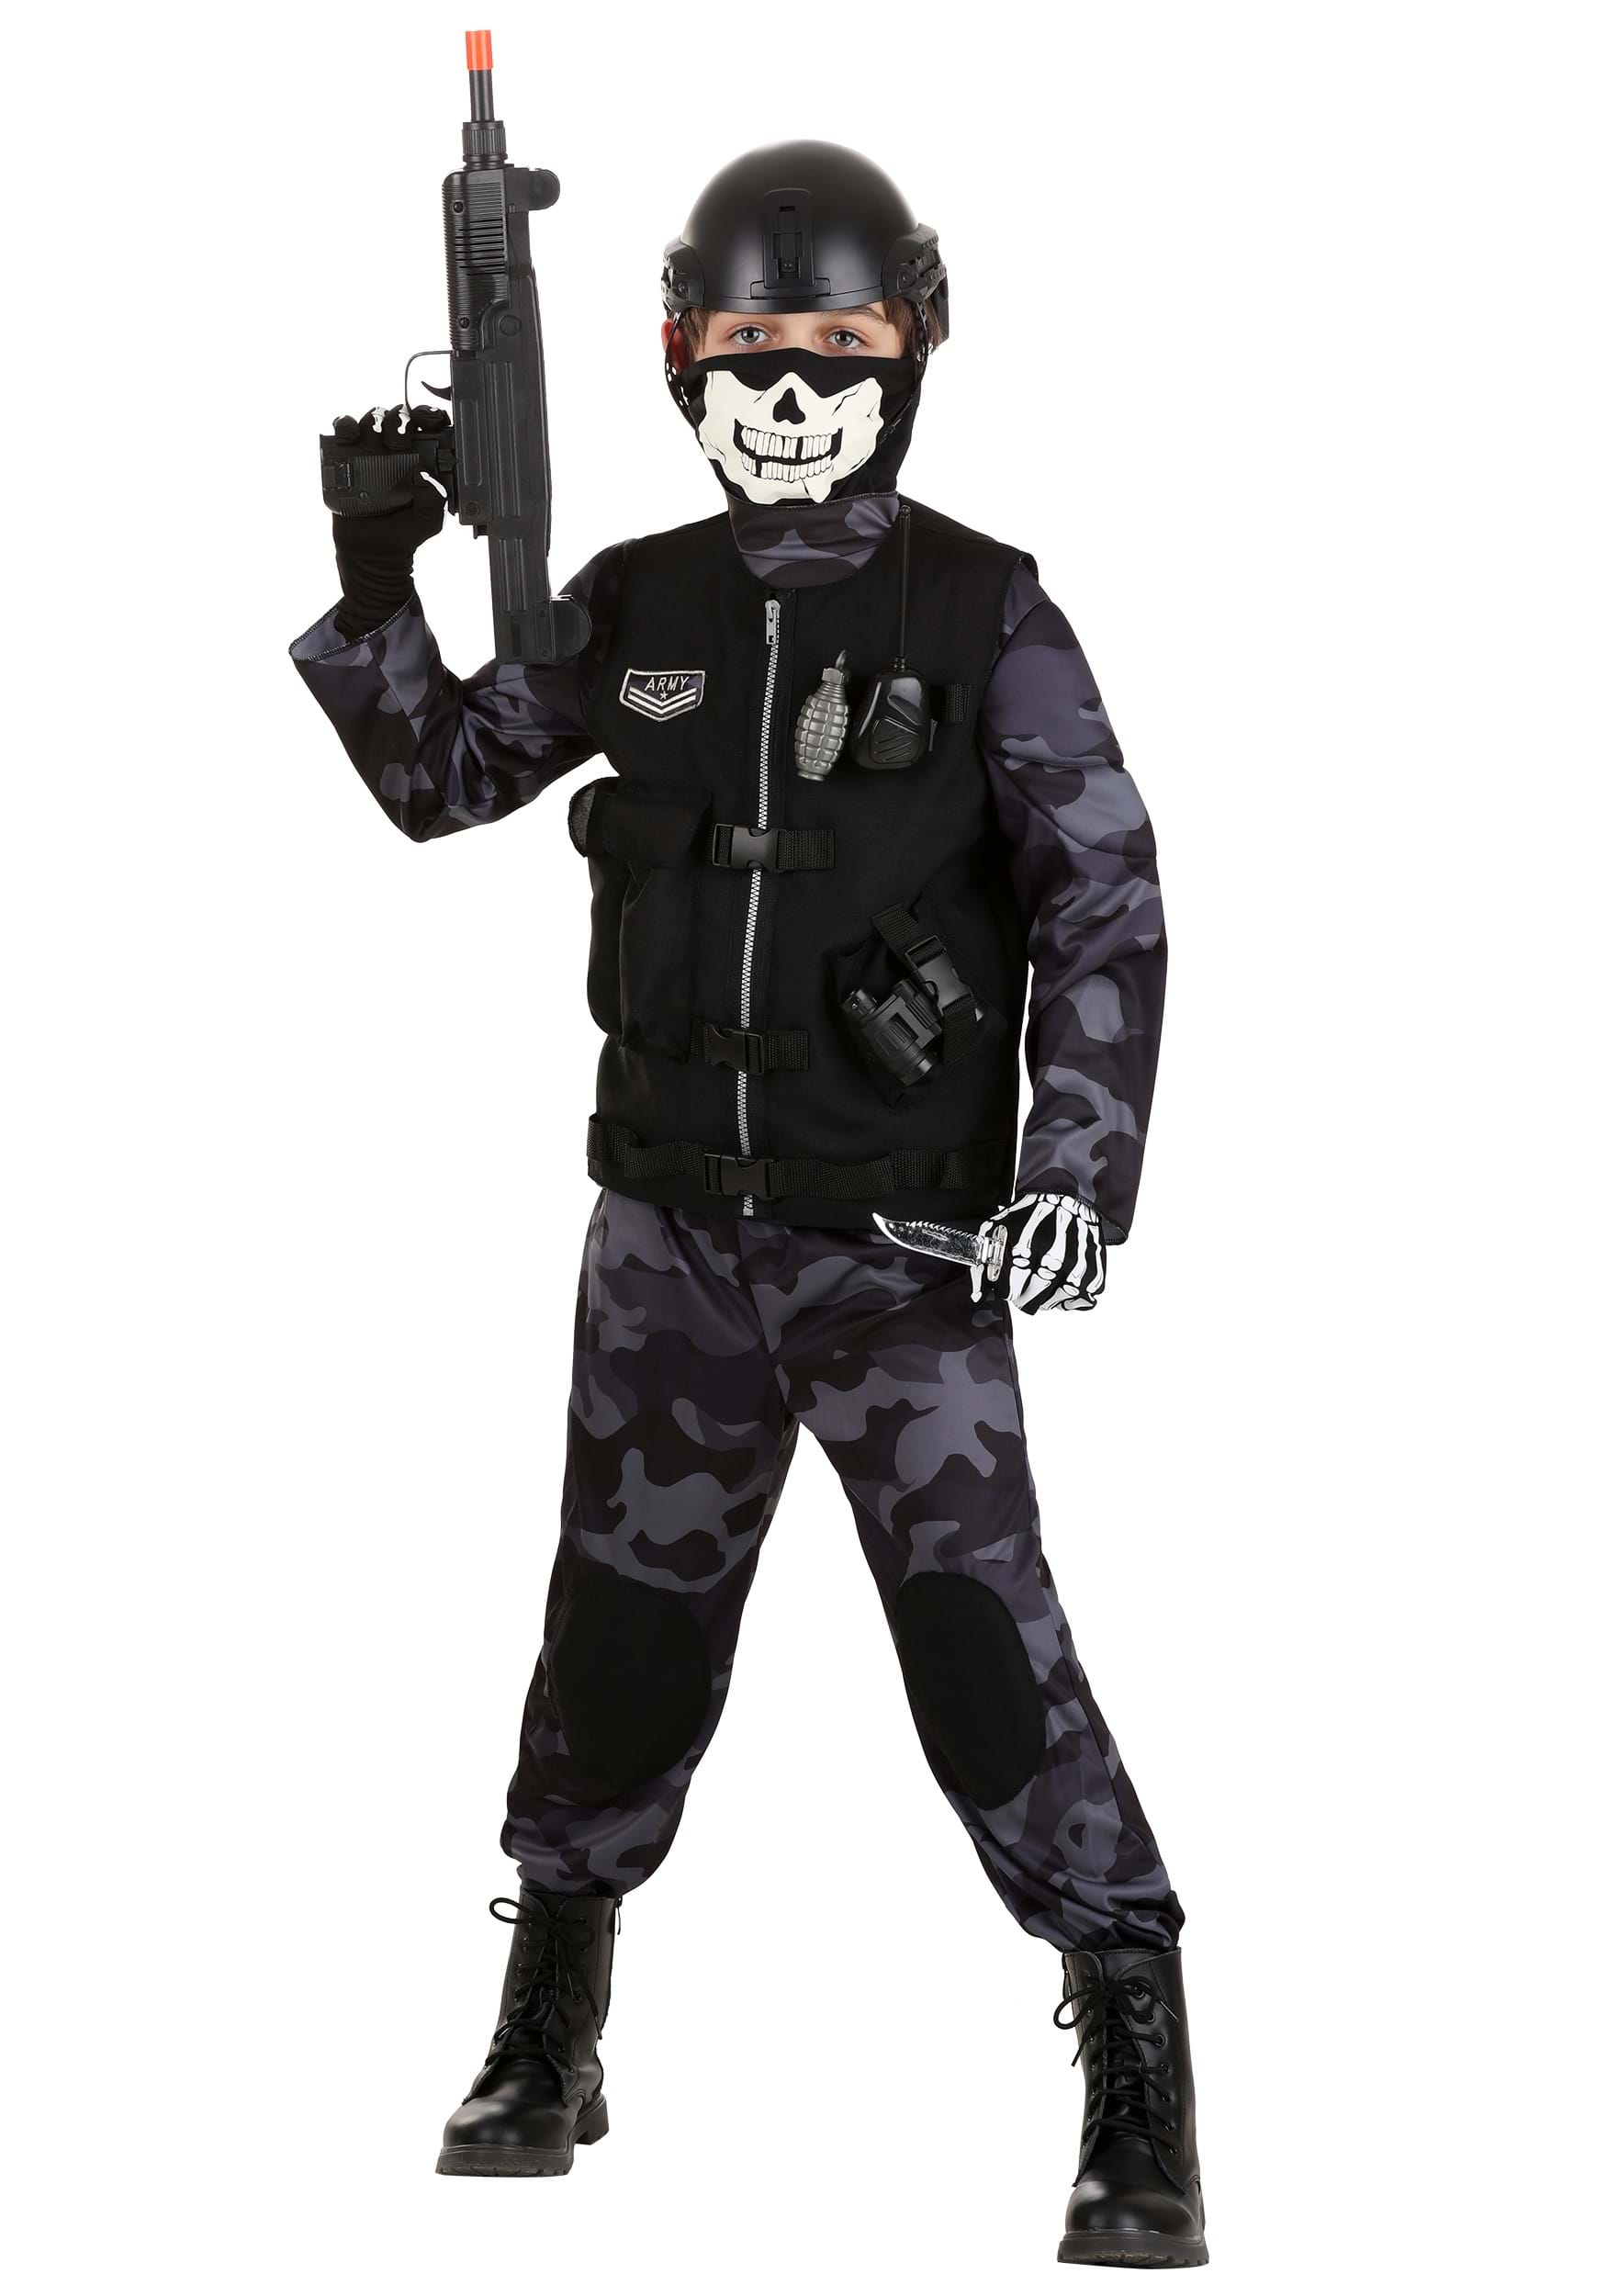 https://images.halloweencostumes.com/products/77389/1-1/kids-elite-army-costume.jpg